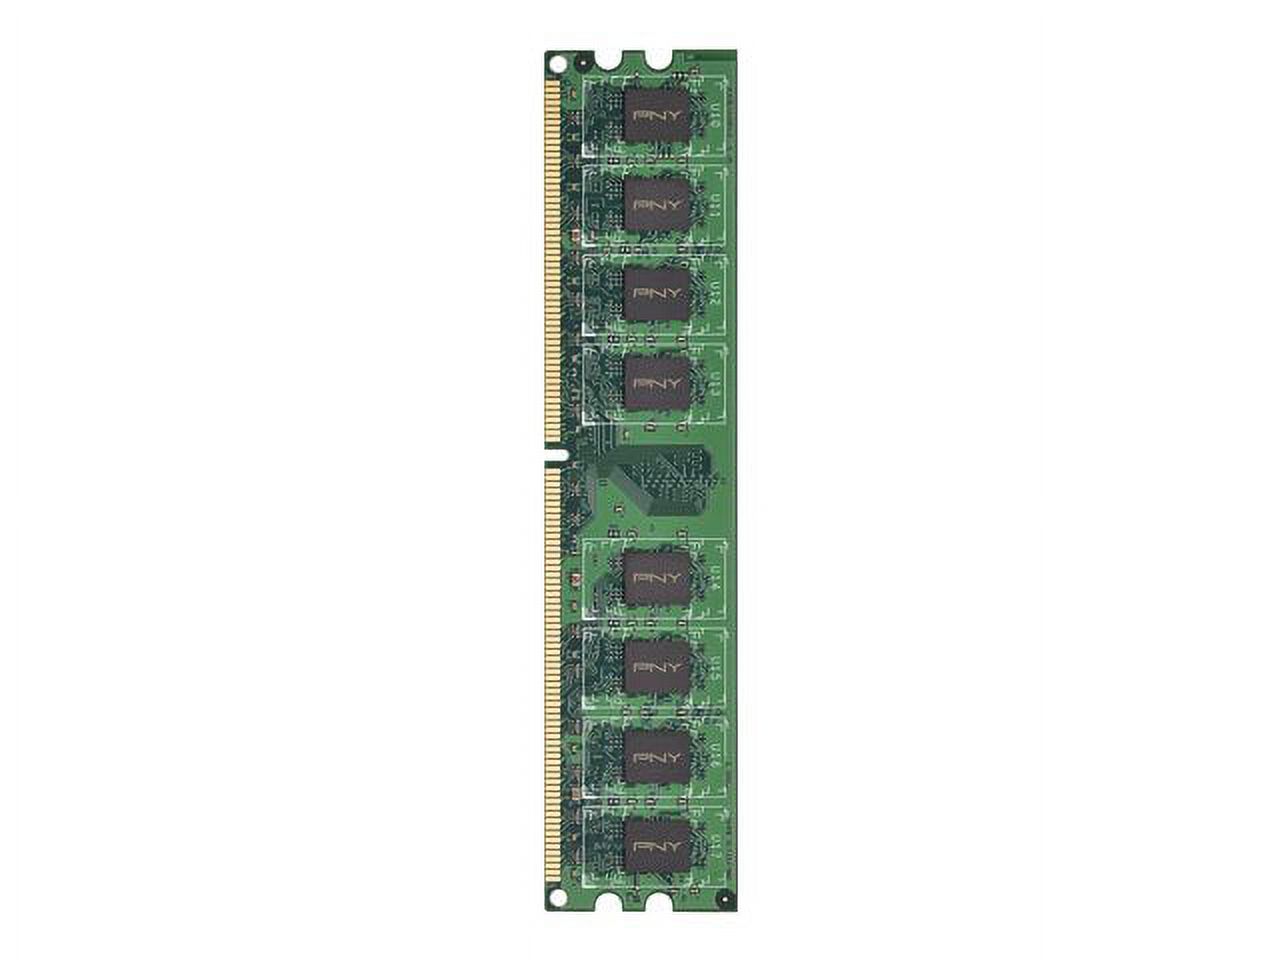 PNY 1GB DDR2 SDRAM Memory Module - image 4 of 7